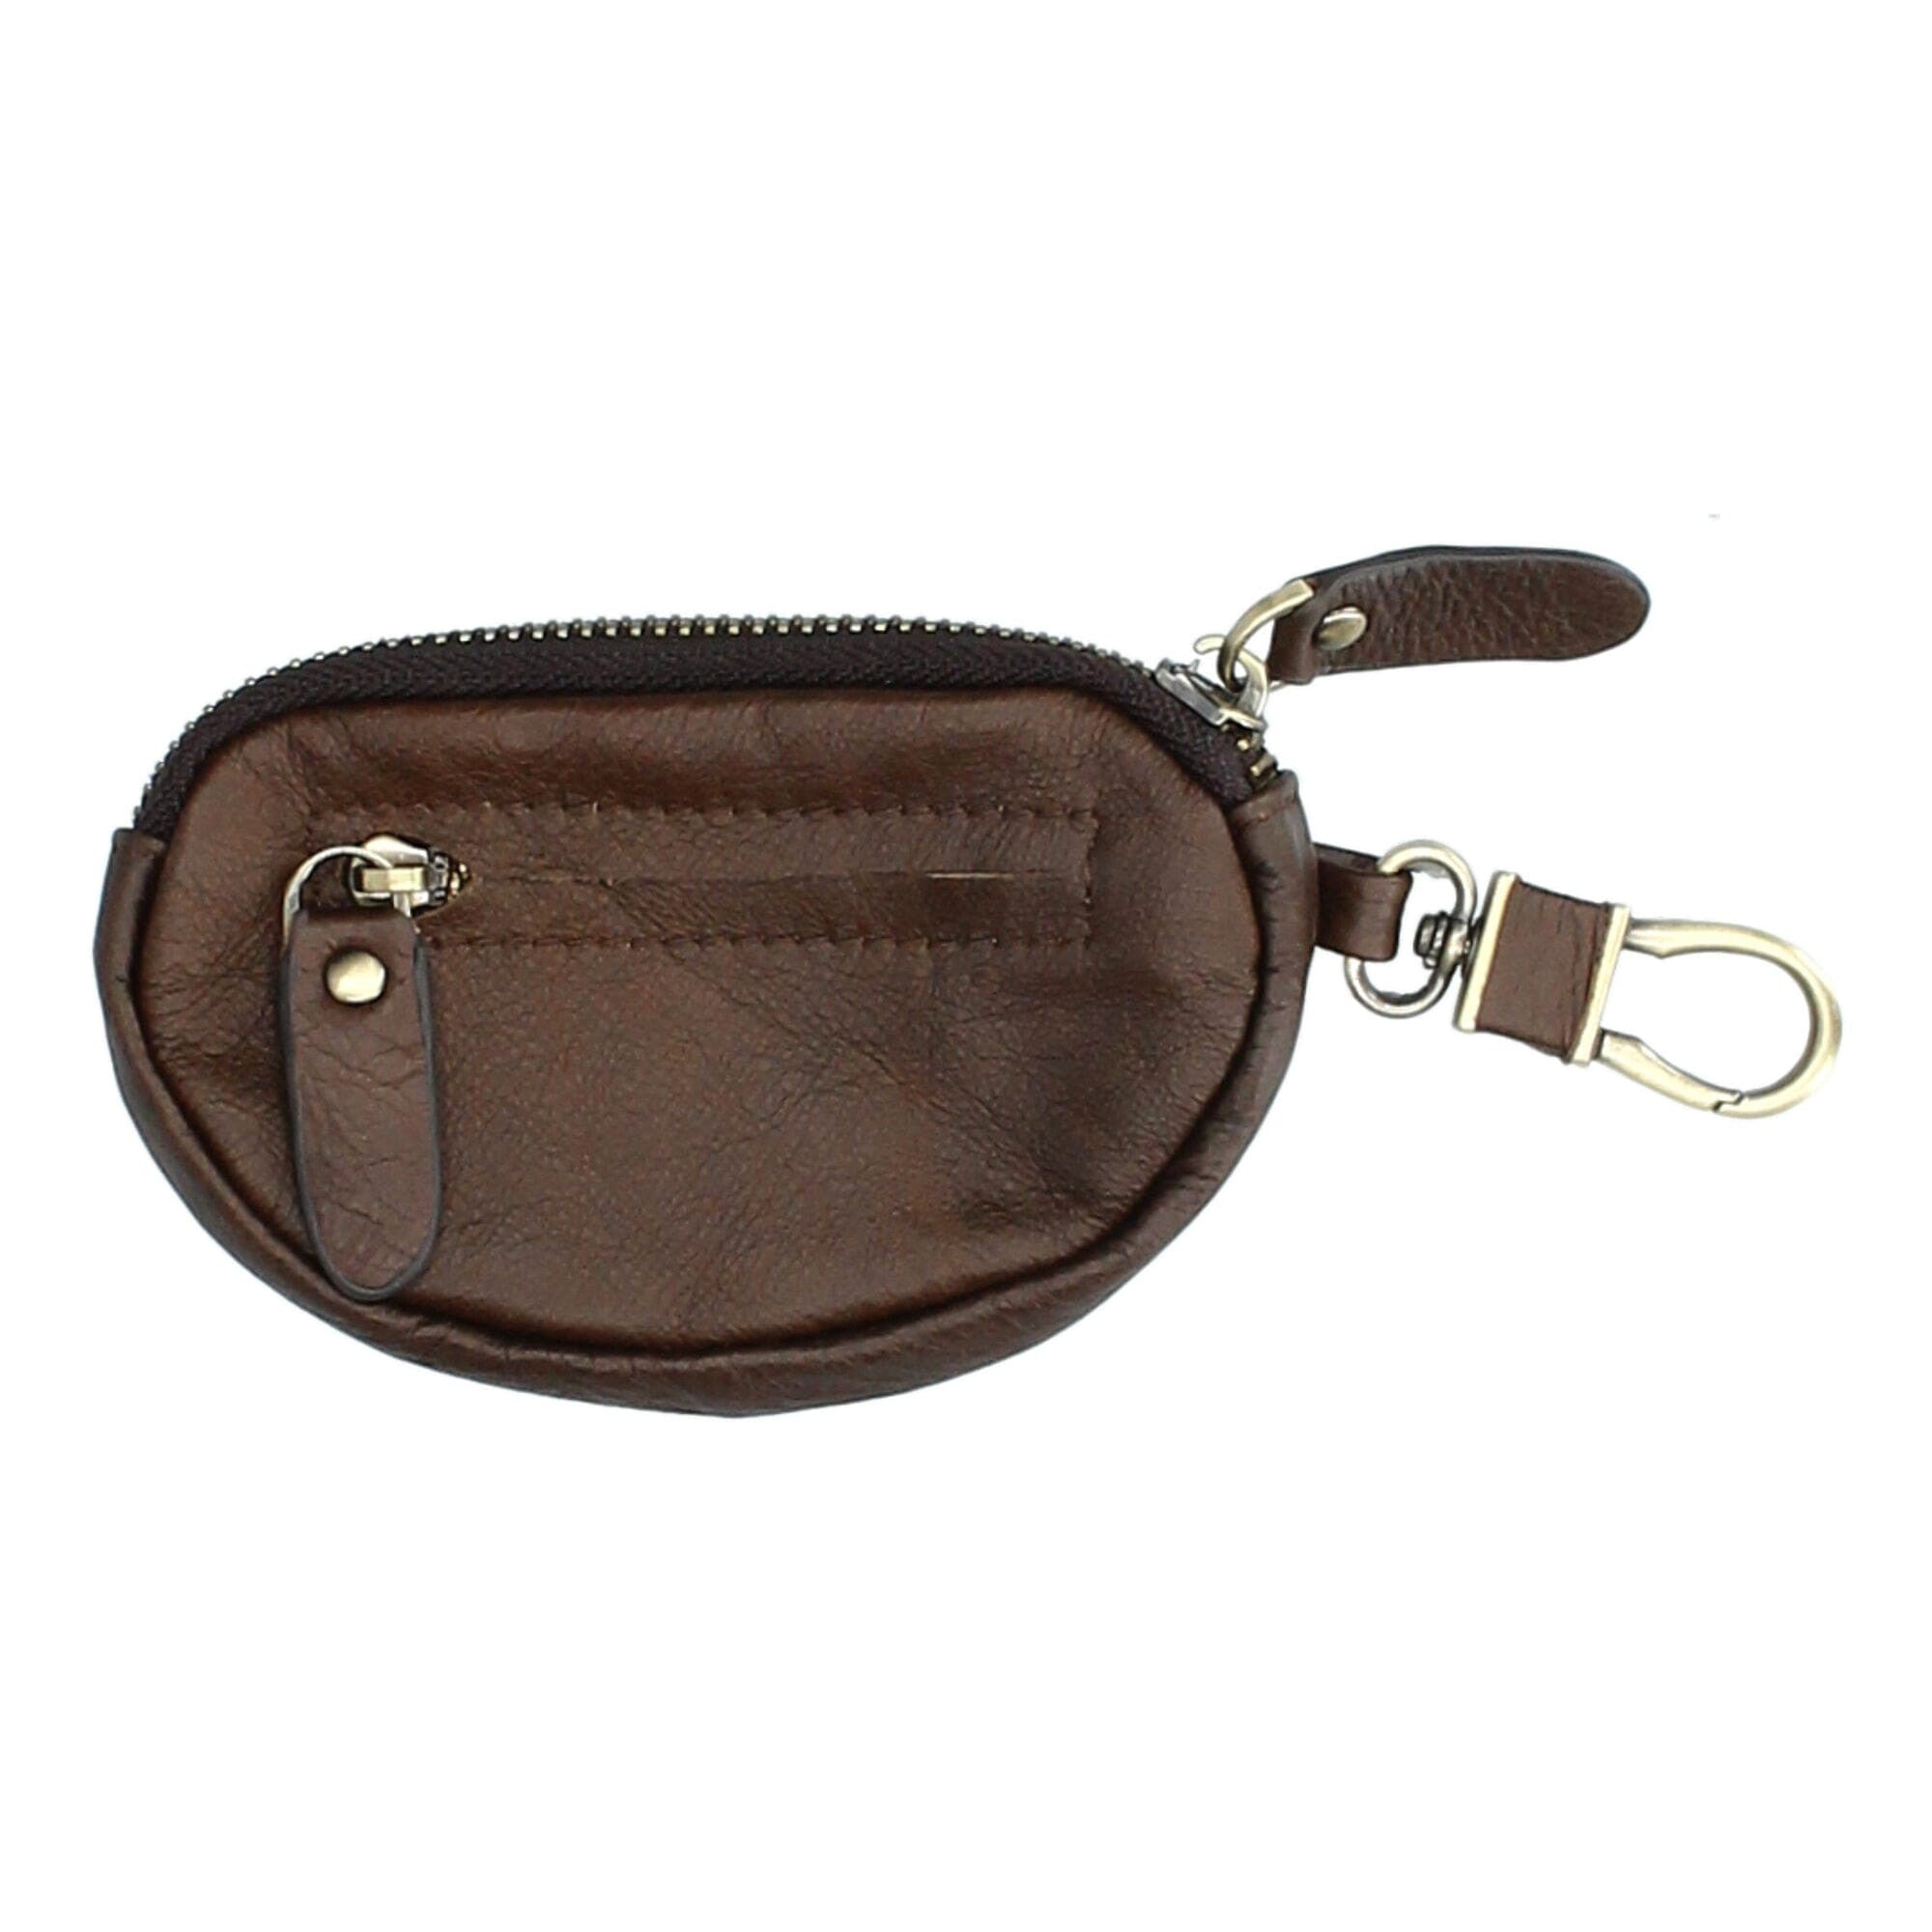 Edouard purse & keyring - Small leather goods